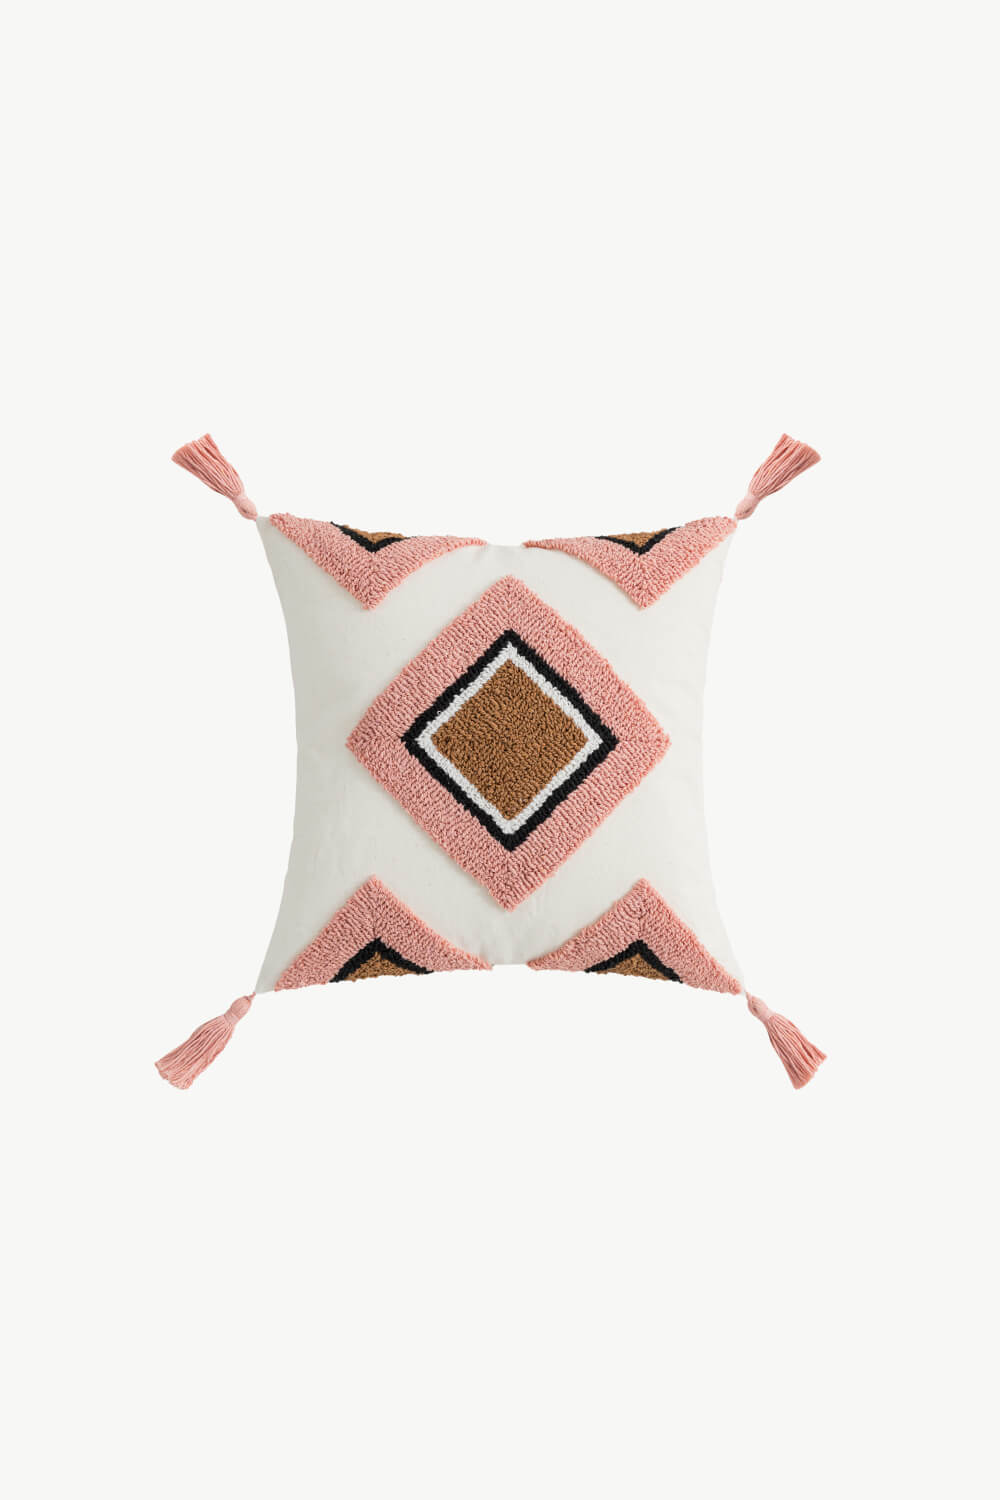 4 Styles Geometric Graphic Tassel Pillow Cover - BloomBliss.com